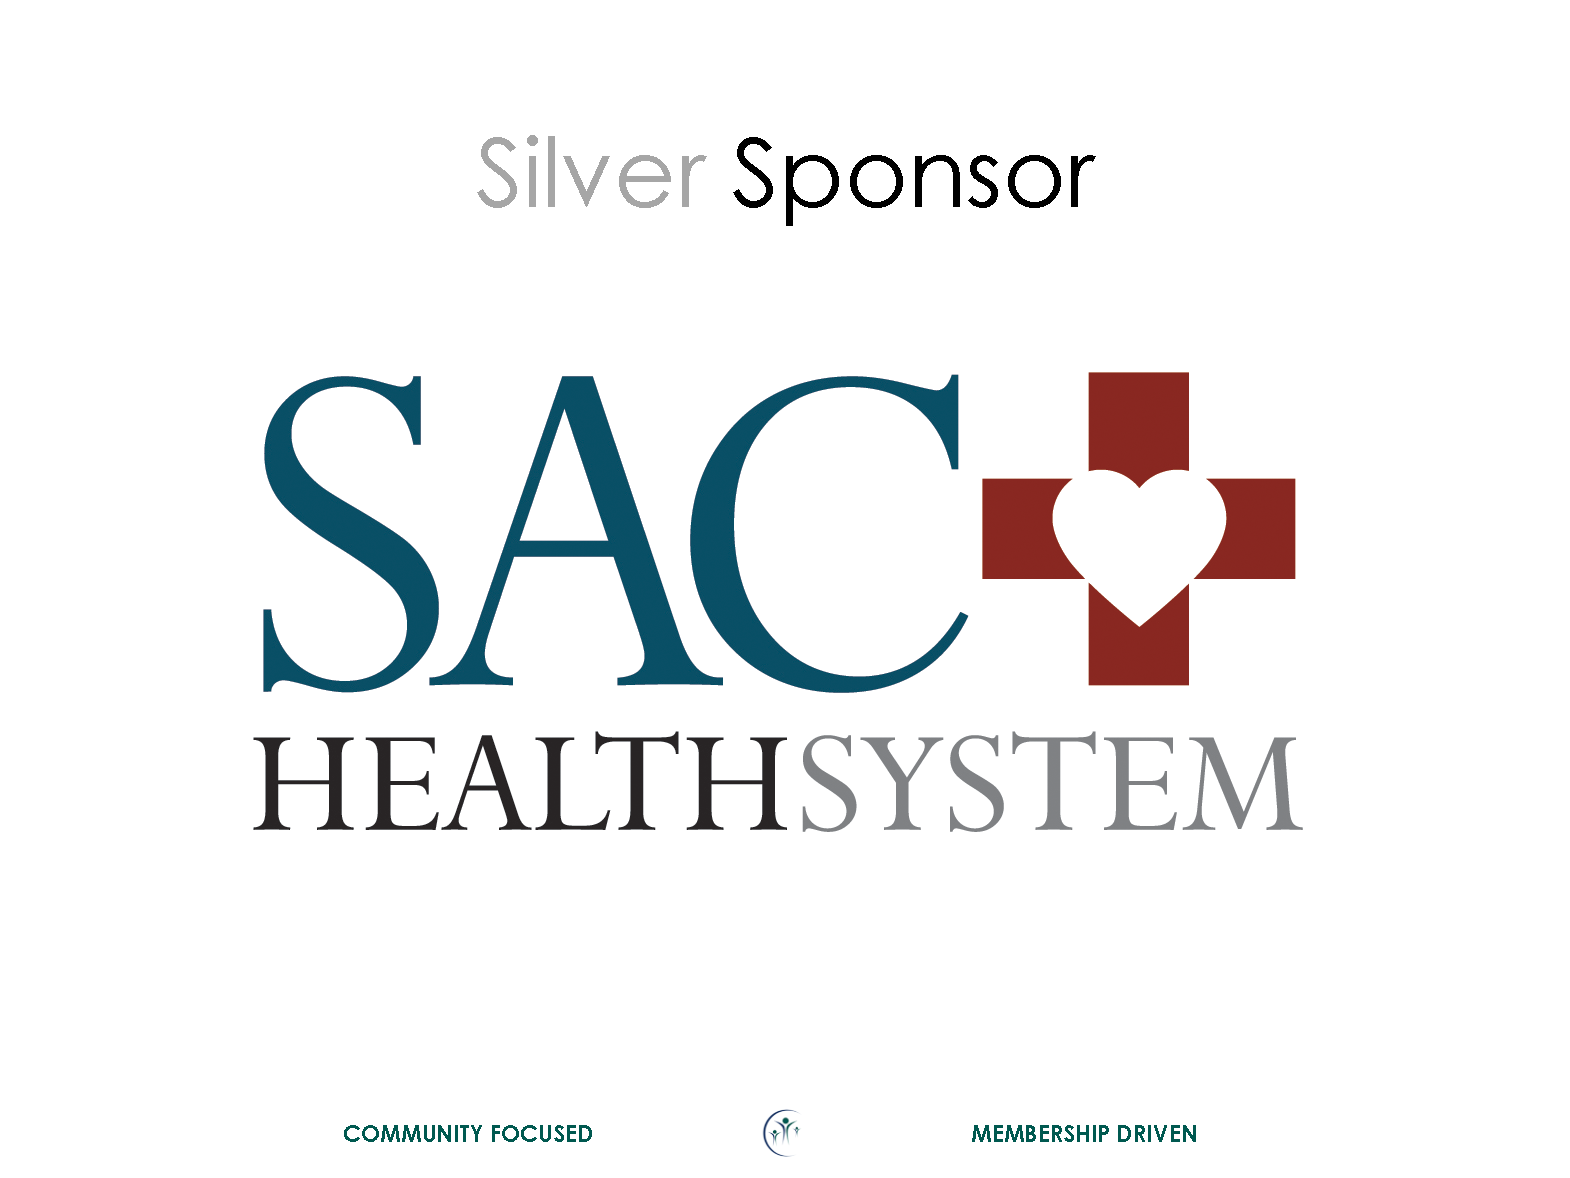 SACHS Silver Sponsor